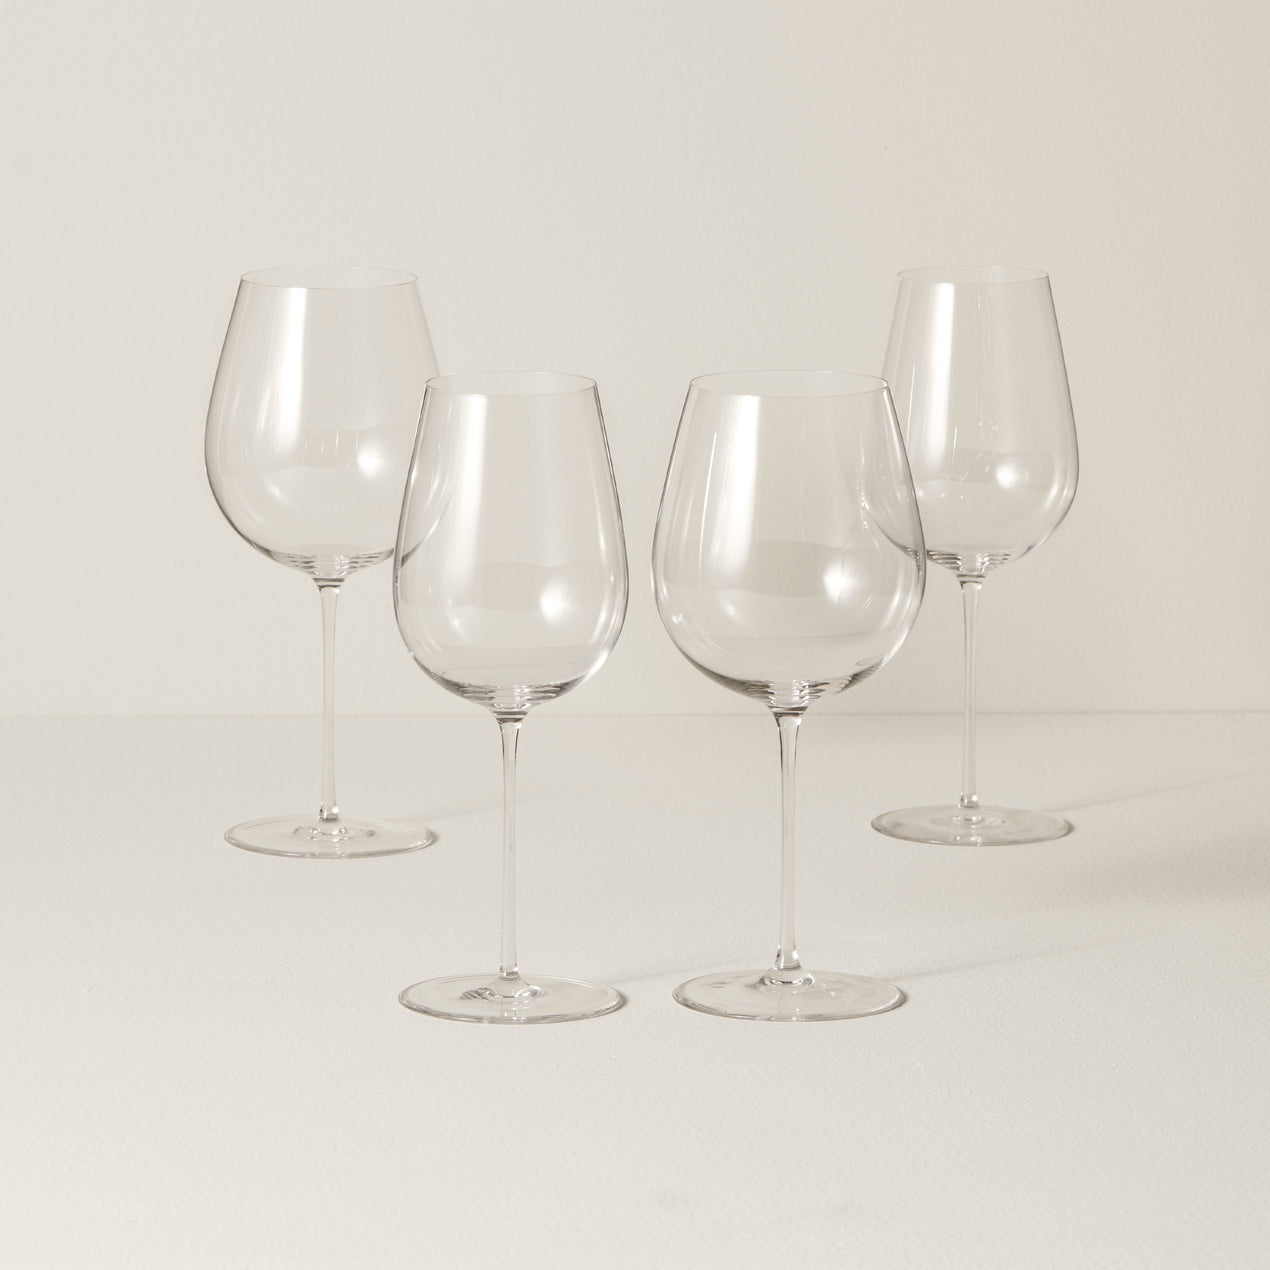 Lenox Wine Glasses Collection